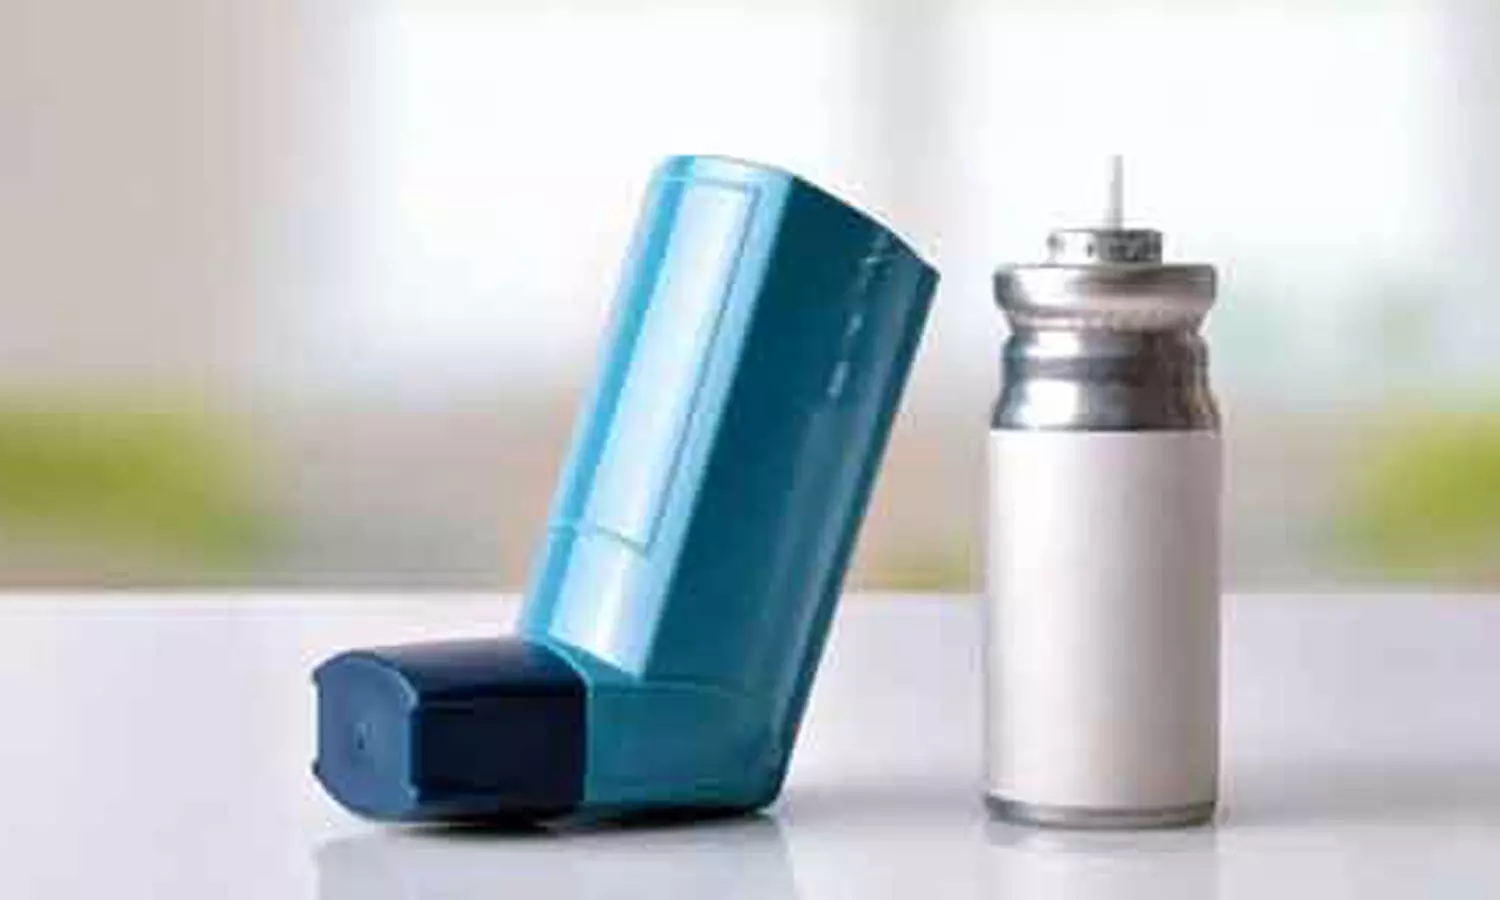 Smart asthma inhaler sensors improve pediatric asthma control